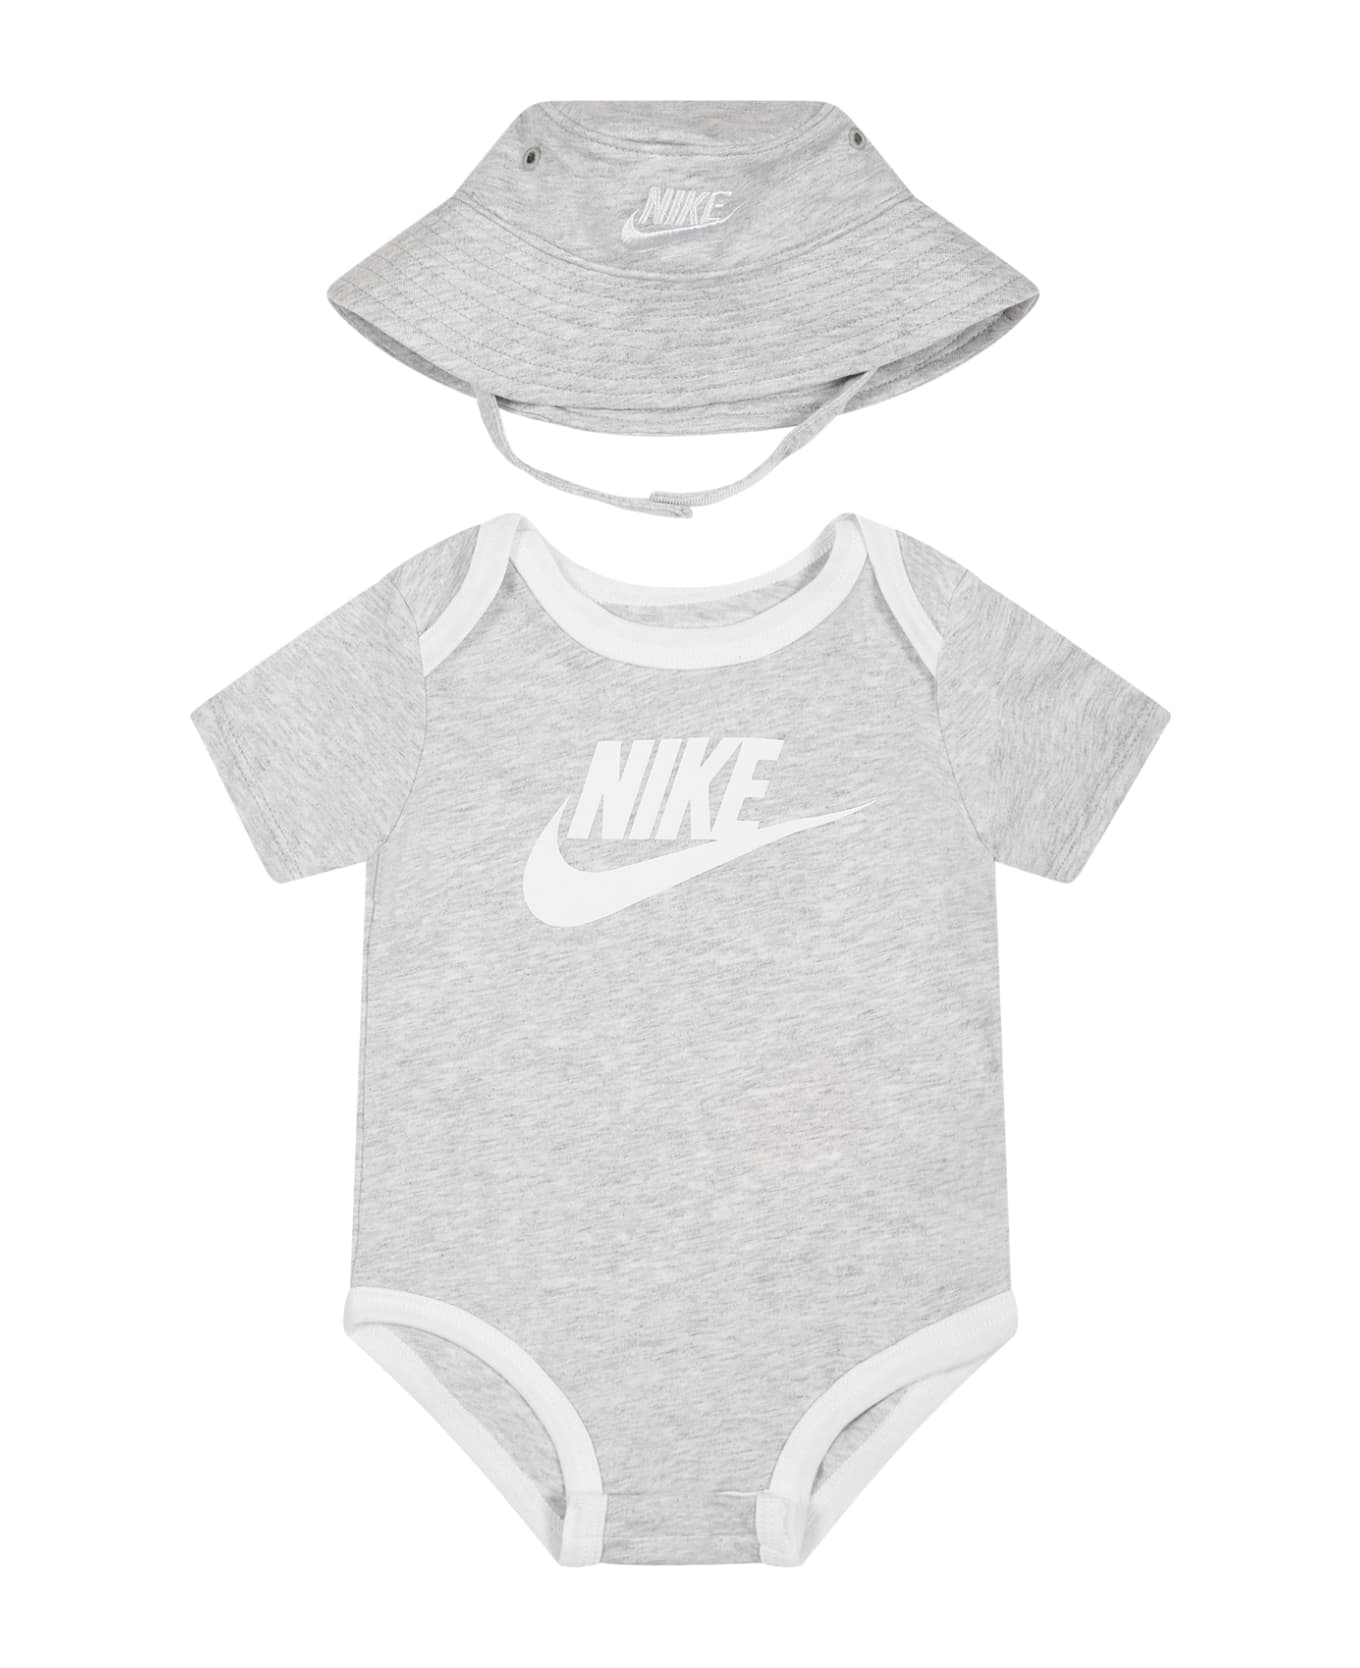 Nike Grey Set For Baby Kids With Logo - Grey